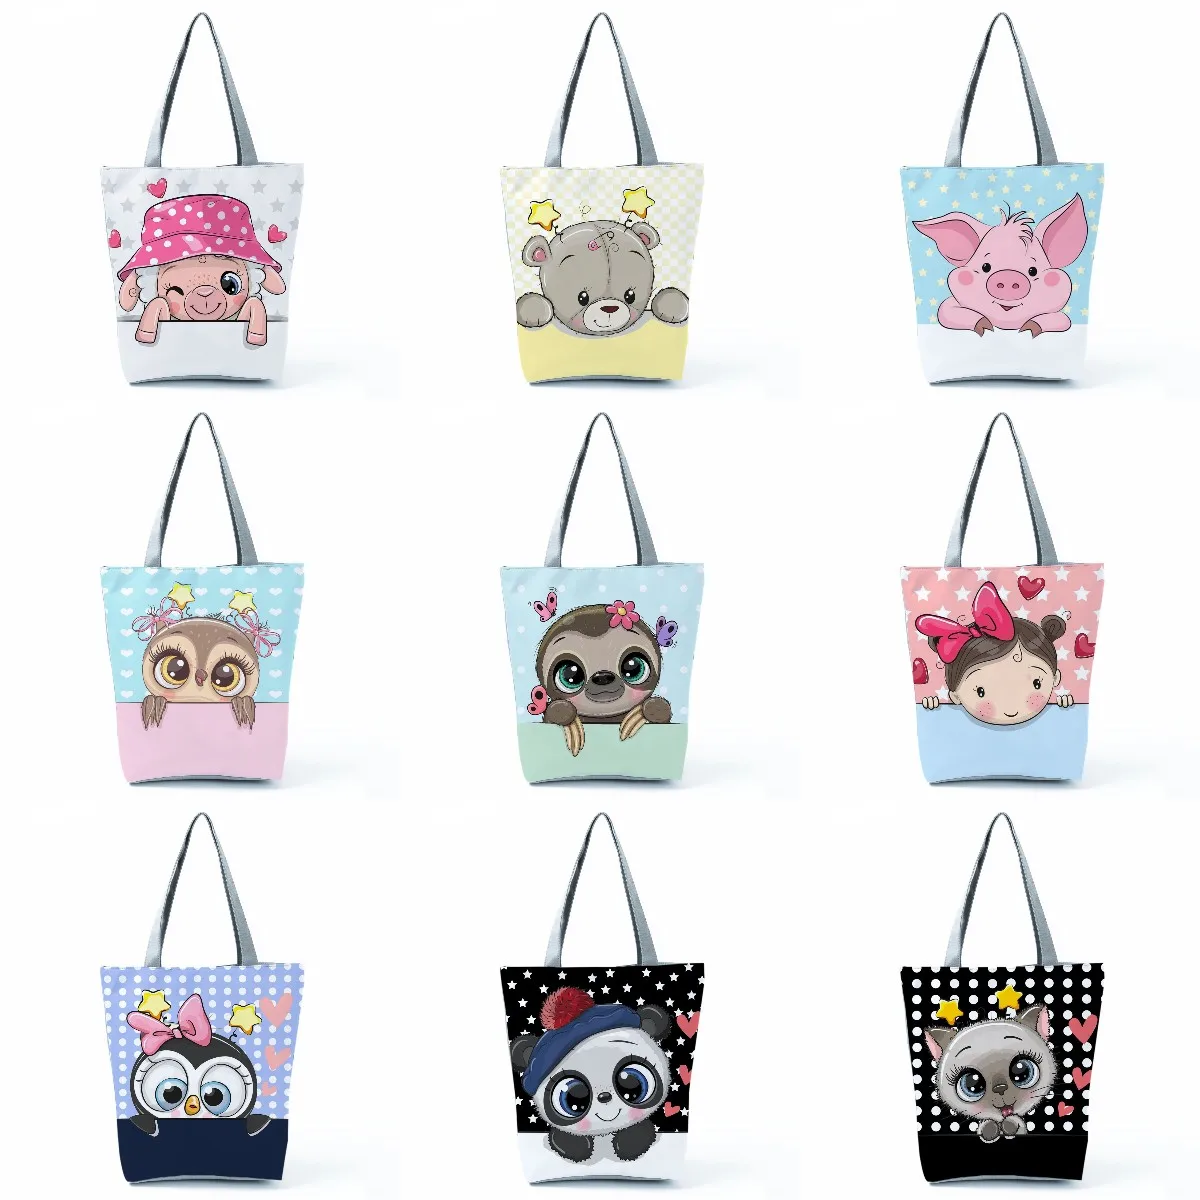 

Outdoor Ladies Shopper Bag Large Capacity Travel Bag Foldable Handbag Contrast Pattern Cartoon Animal Print Women's Shoulder Bag